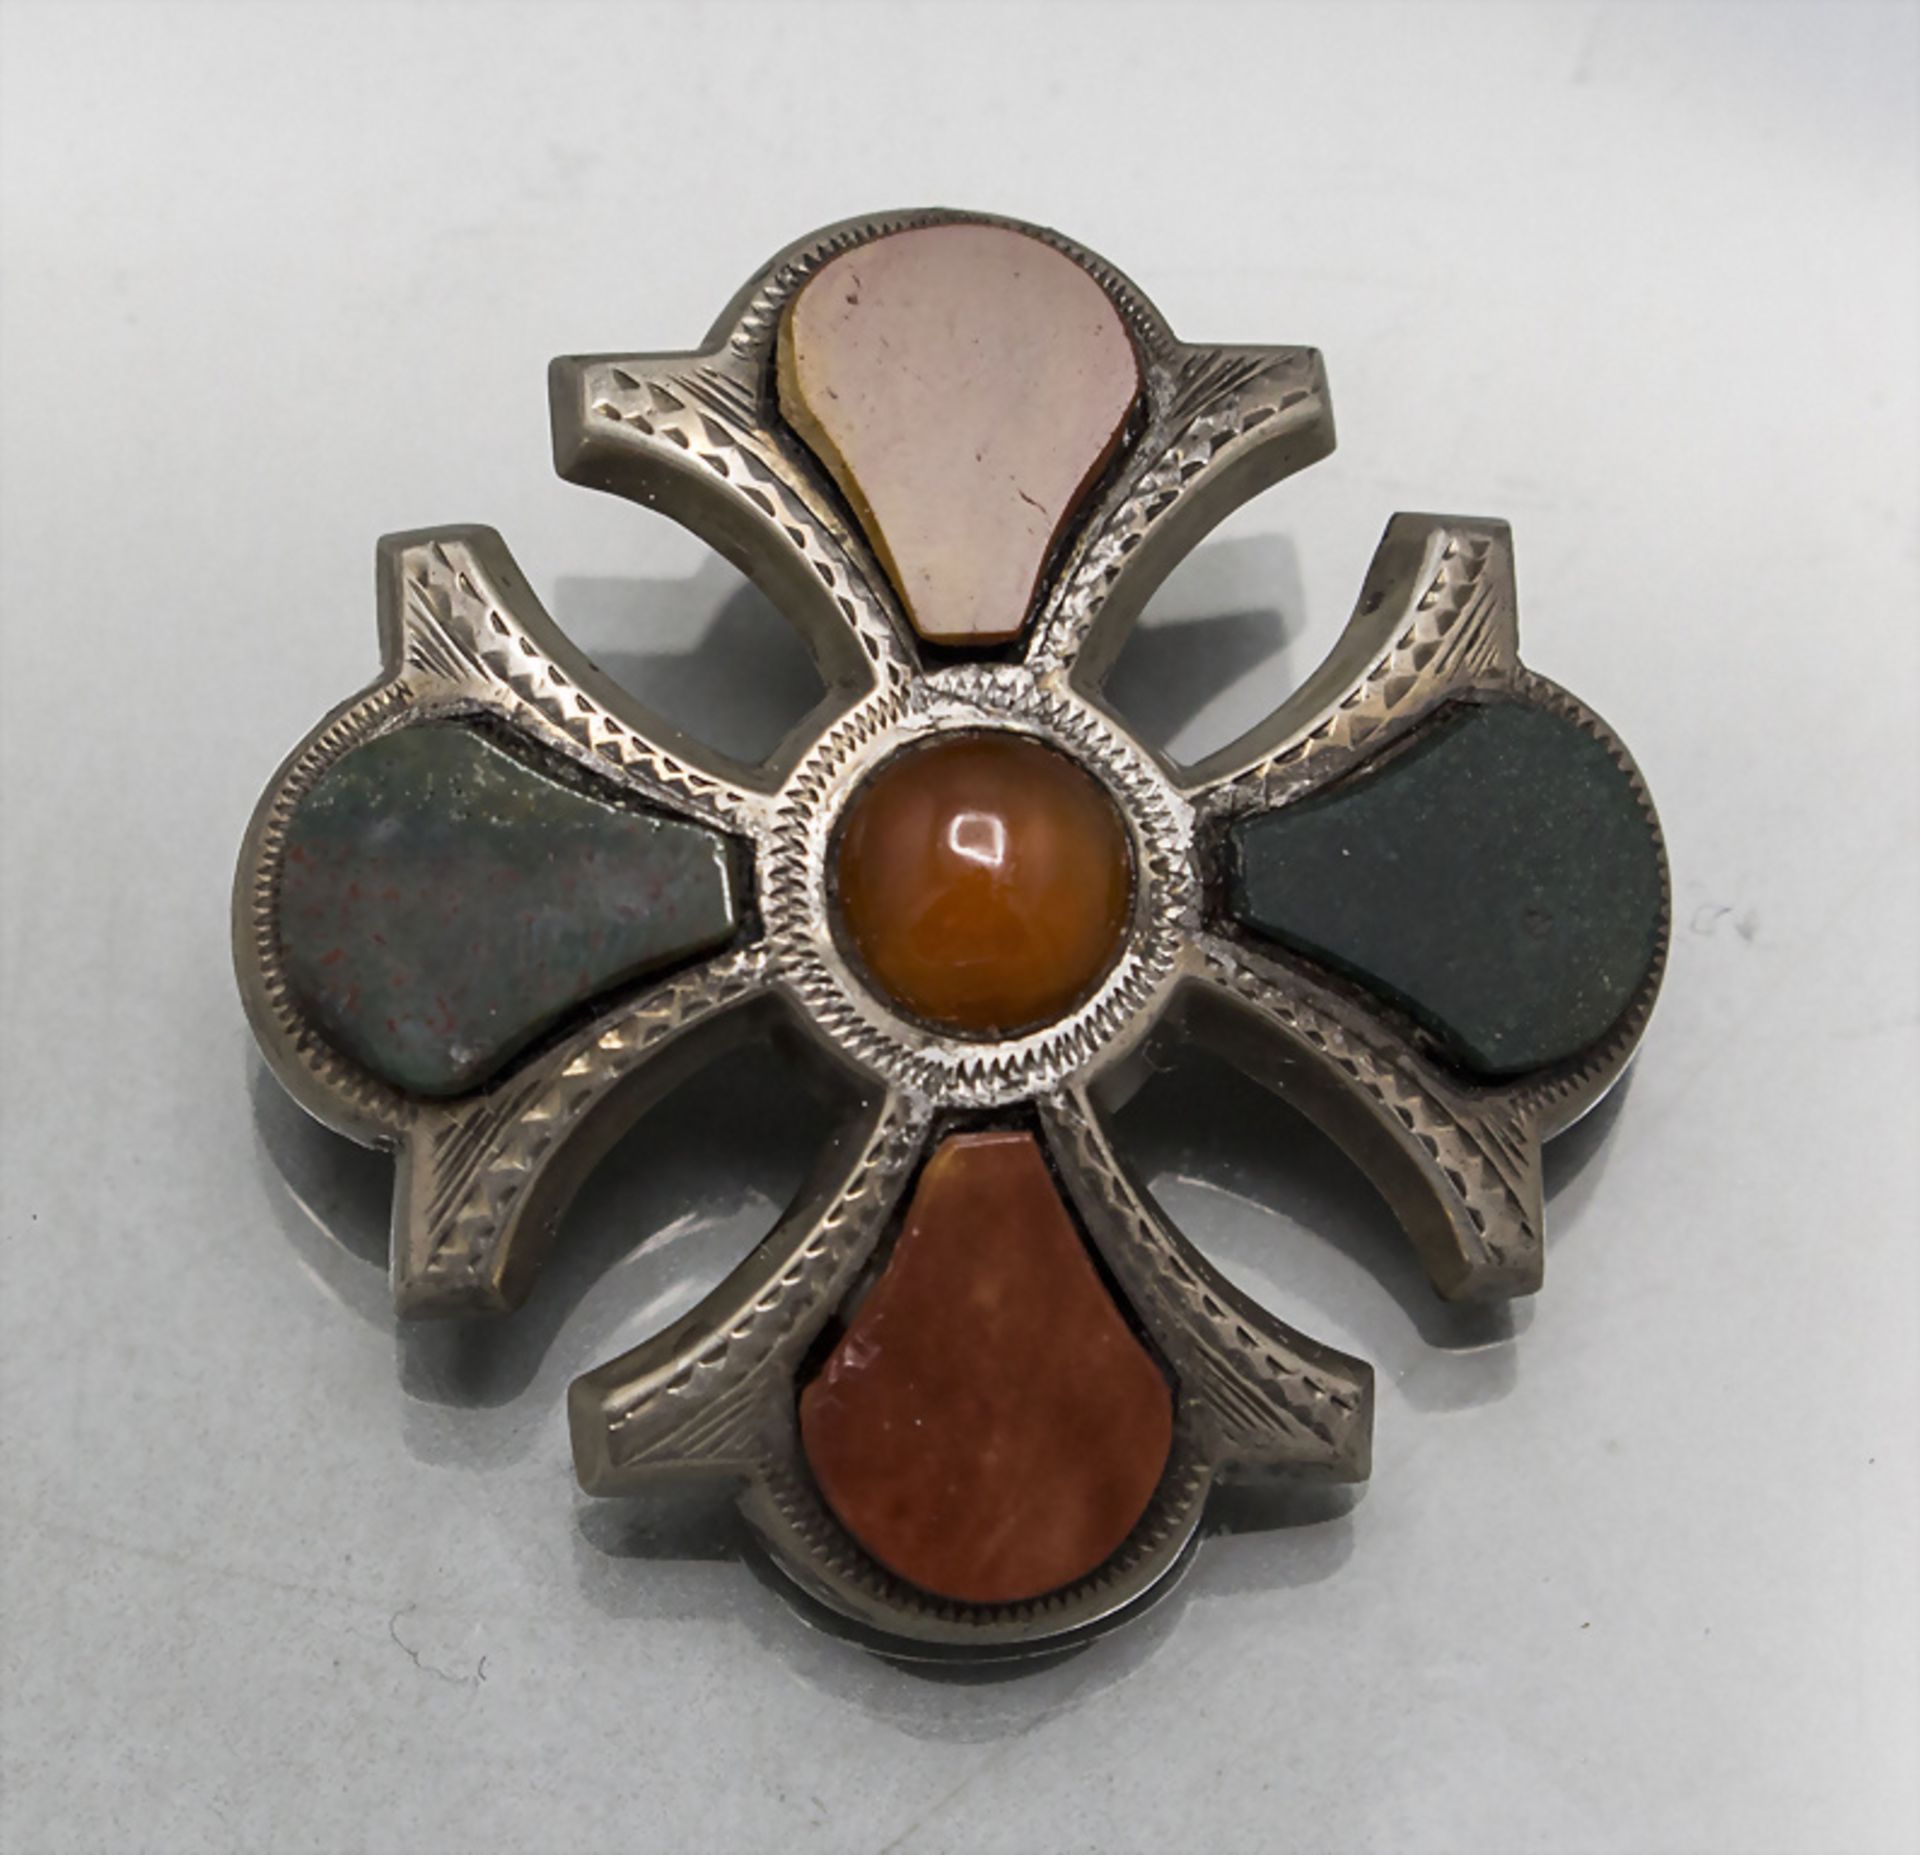 Kreuzförmige Brosche / A cross shaped brooch